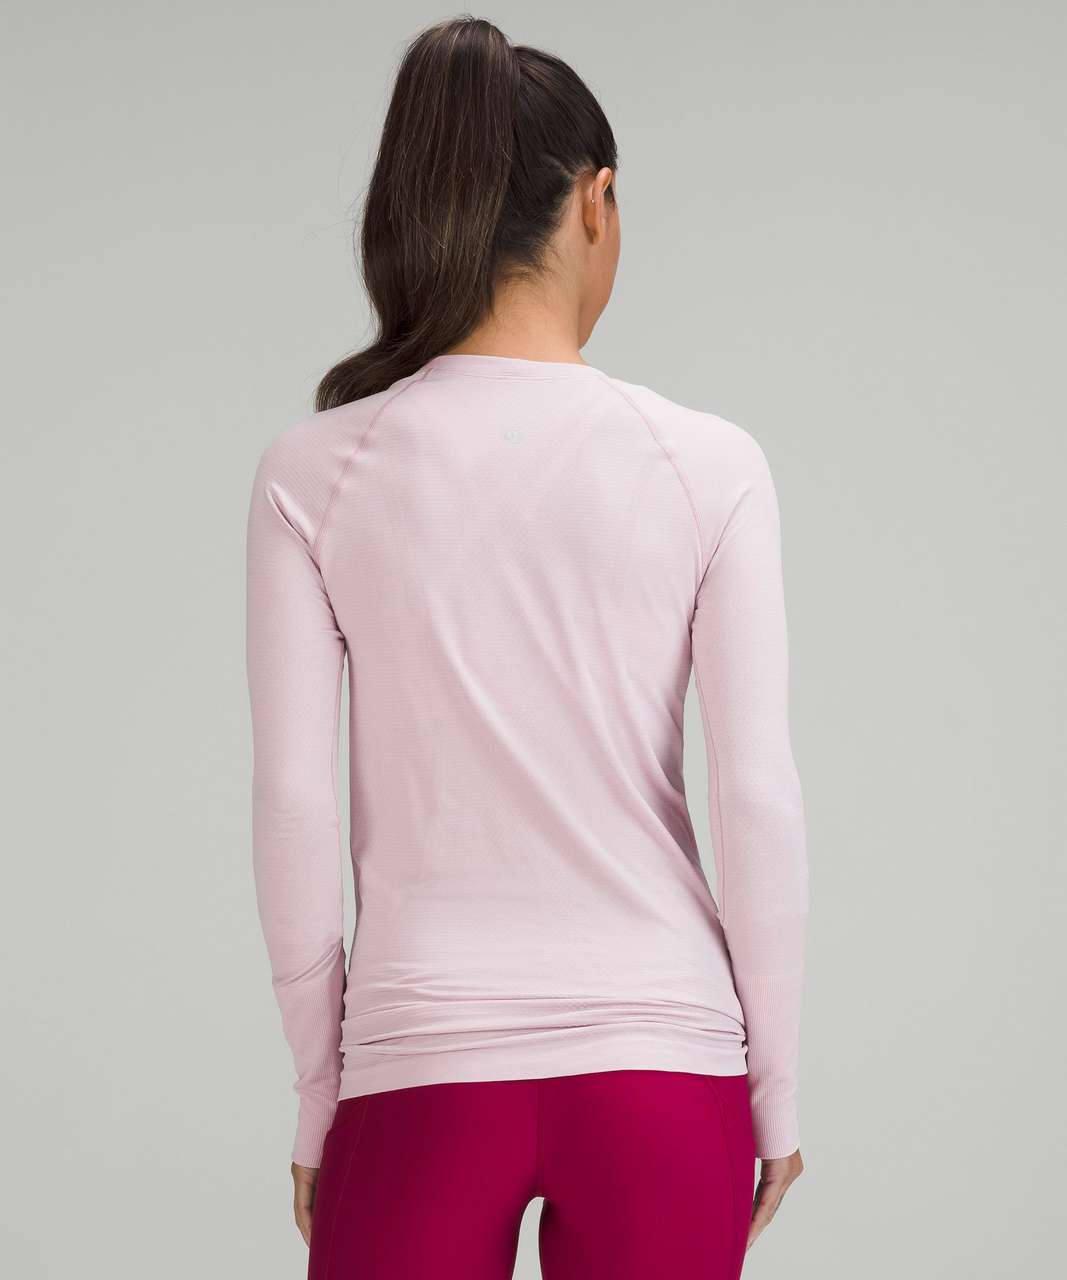 Lululemon Swiftly Tech Long Sleeve Shirt 2.0 - Pink Peony / Pink Peony